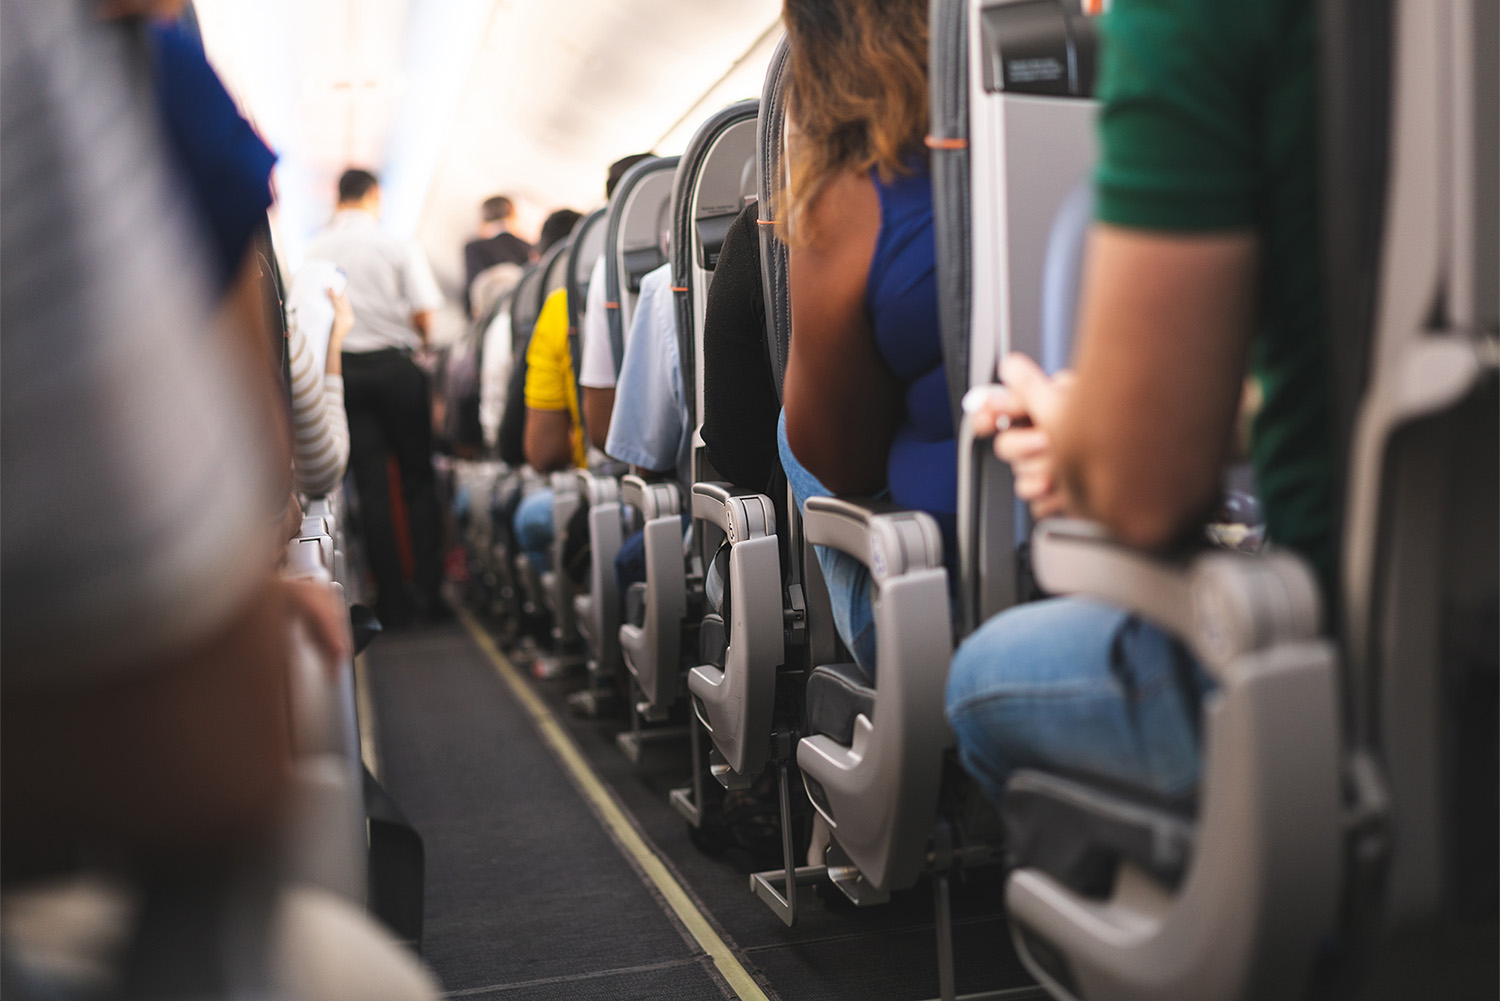 Researchers Explore Causes of Air Passengers’ Turbulent Behavior